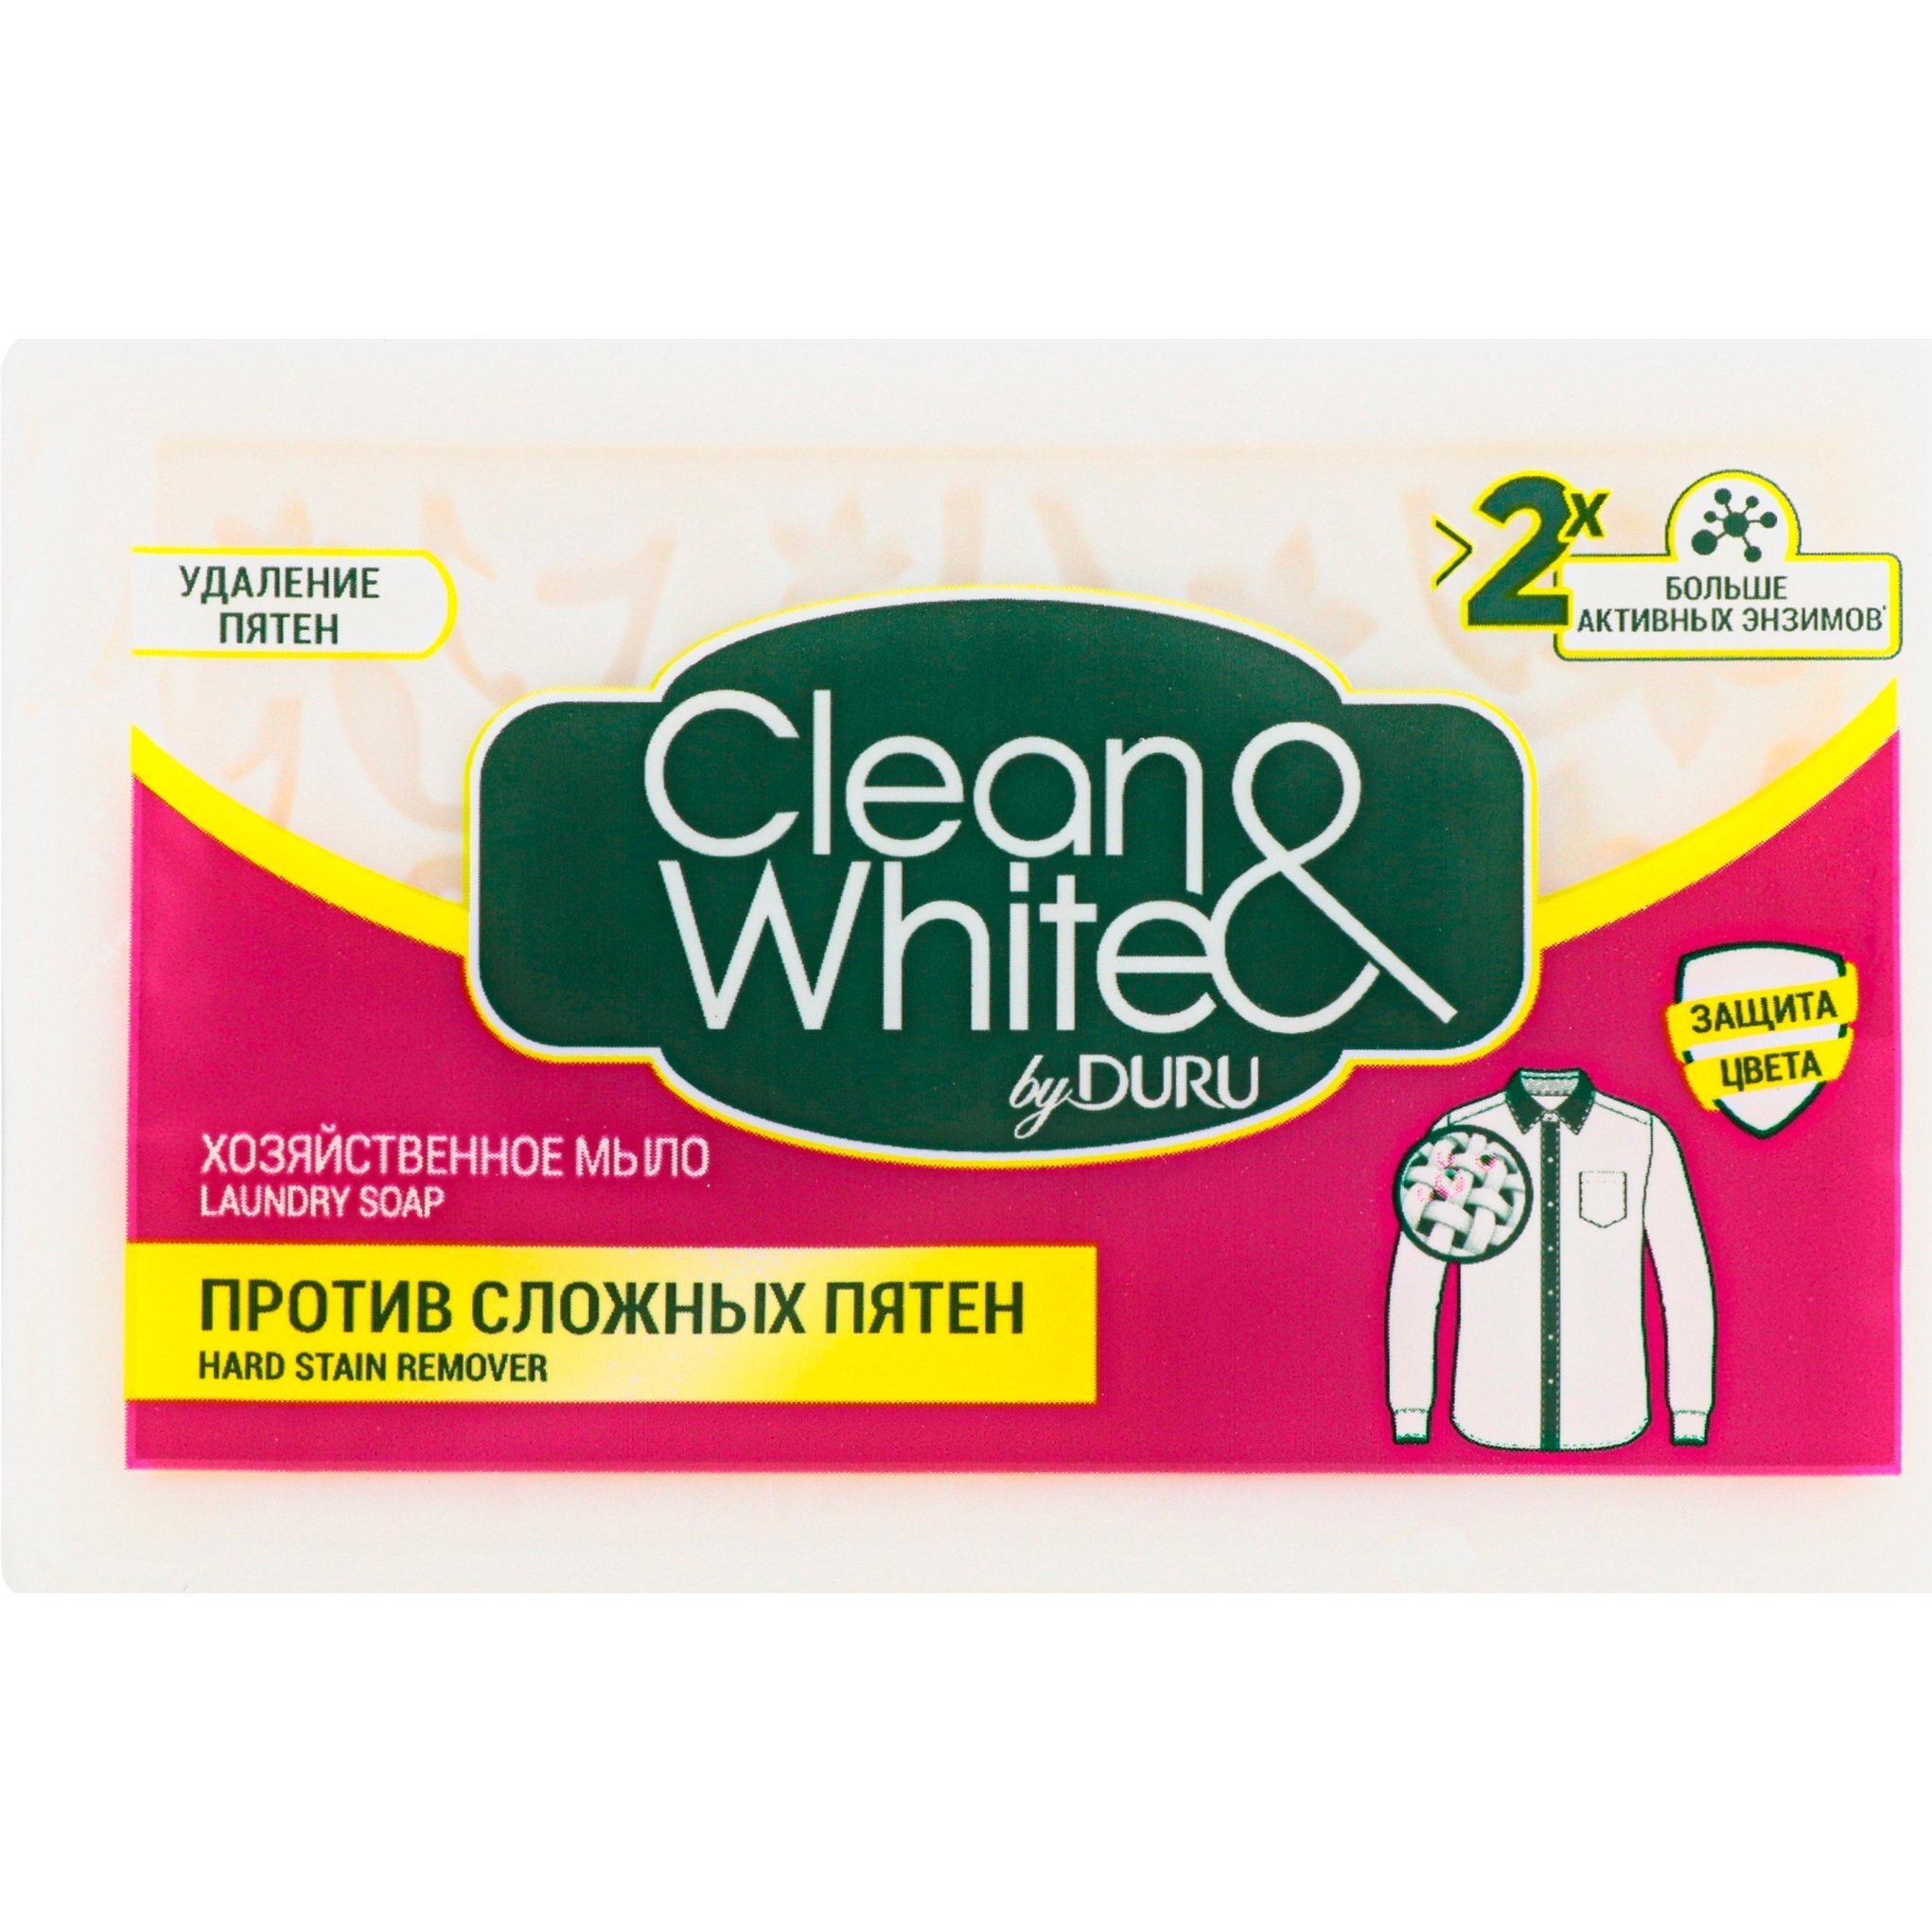 Мыло хозяйственное Clean&White by Duru для удаления пятен 125г фото 1